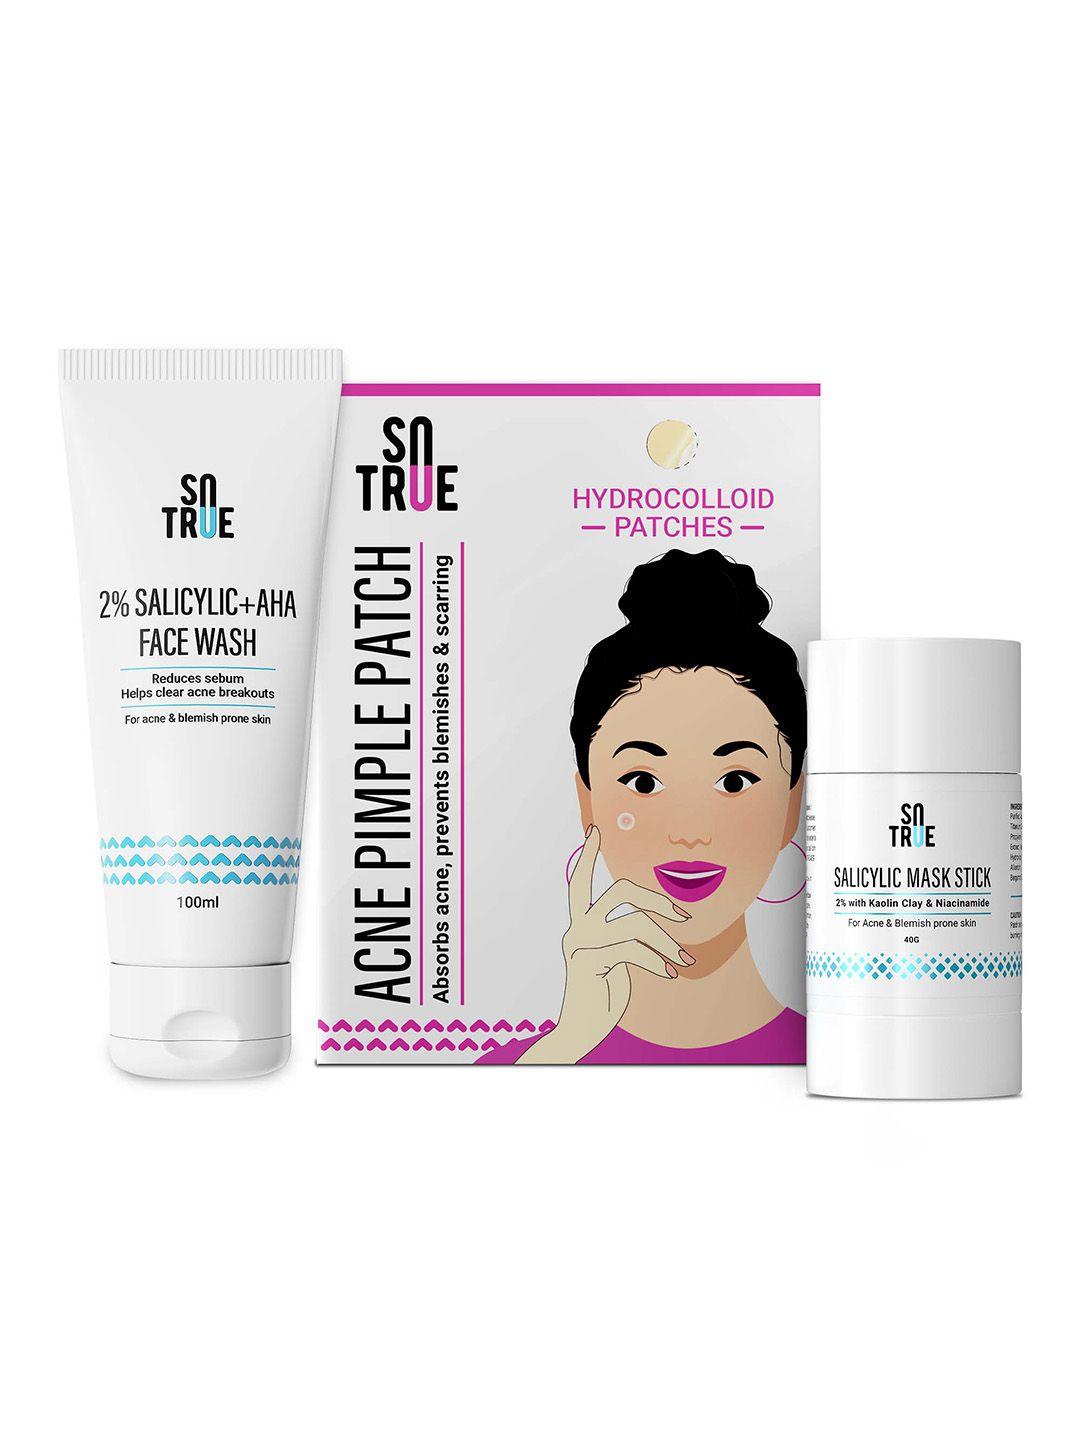 sotrue face kit for acne prone & oily skin